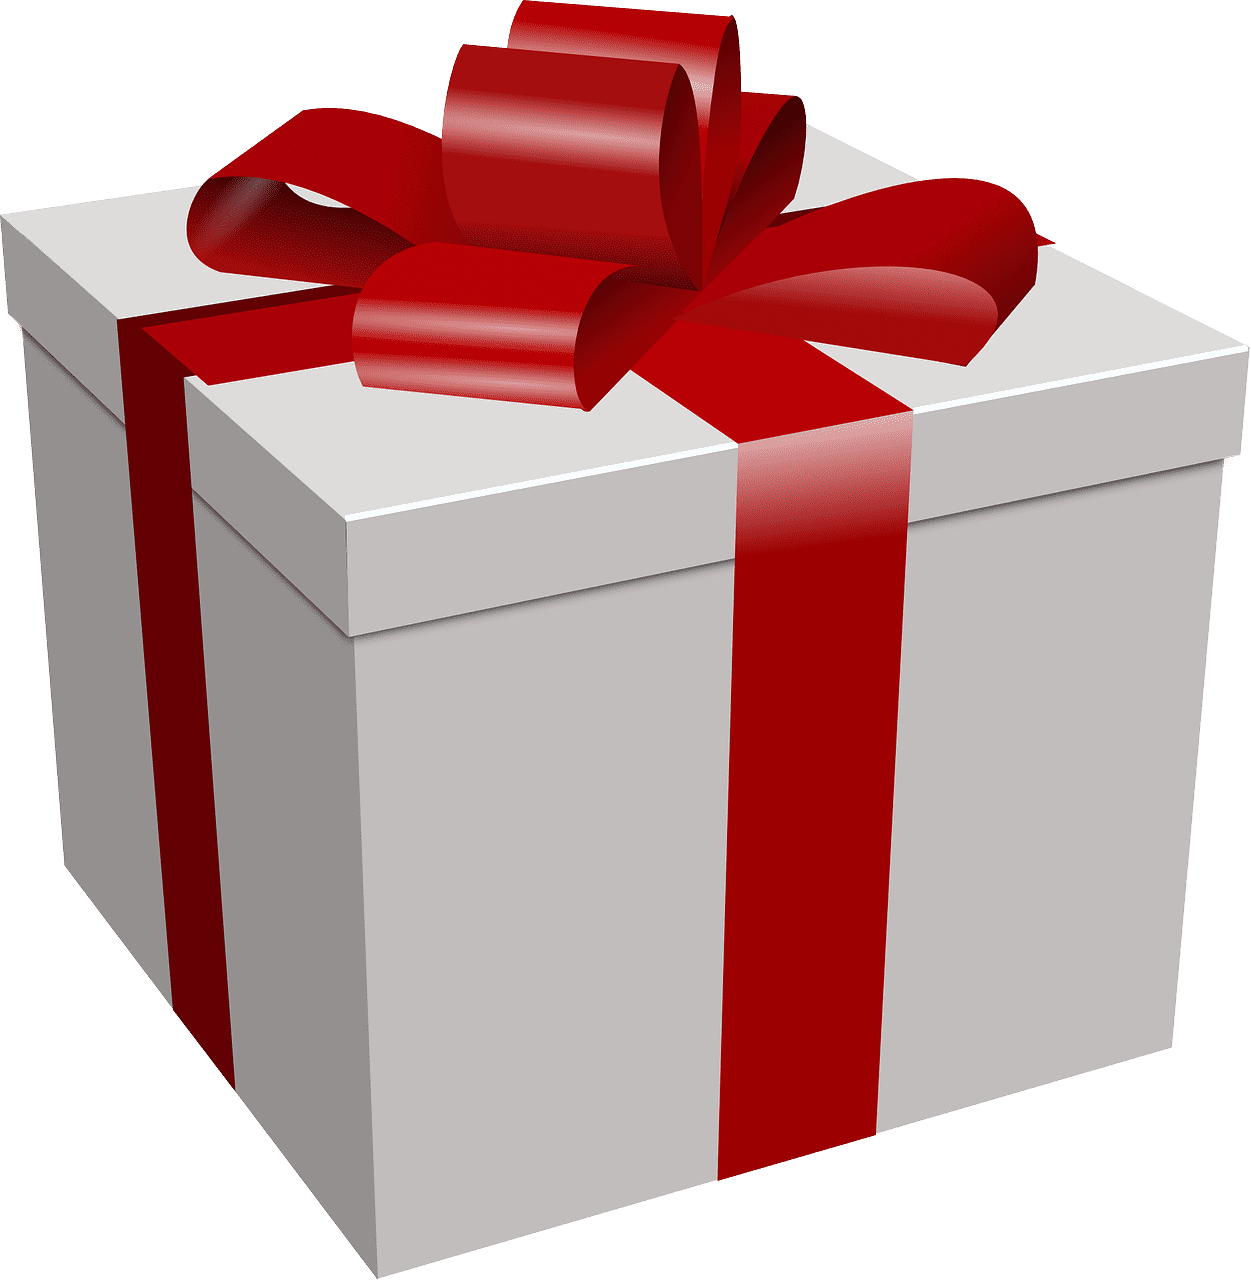 Cartoon of a present | Source: Pixabay